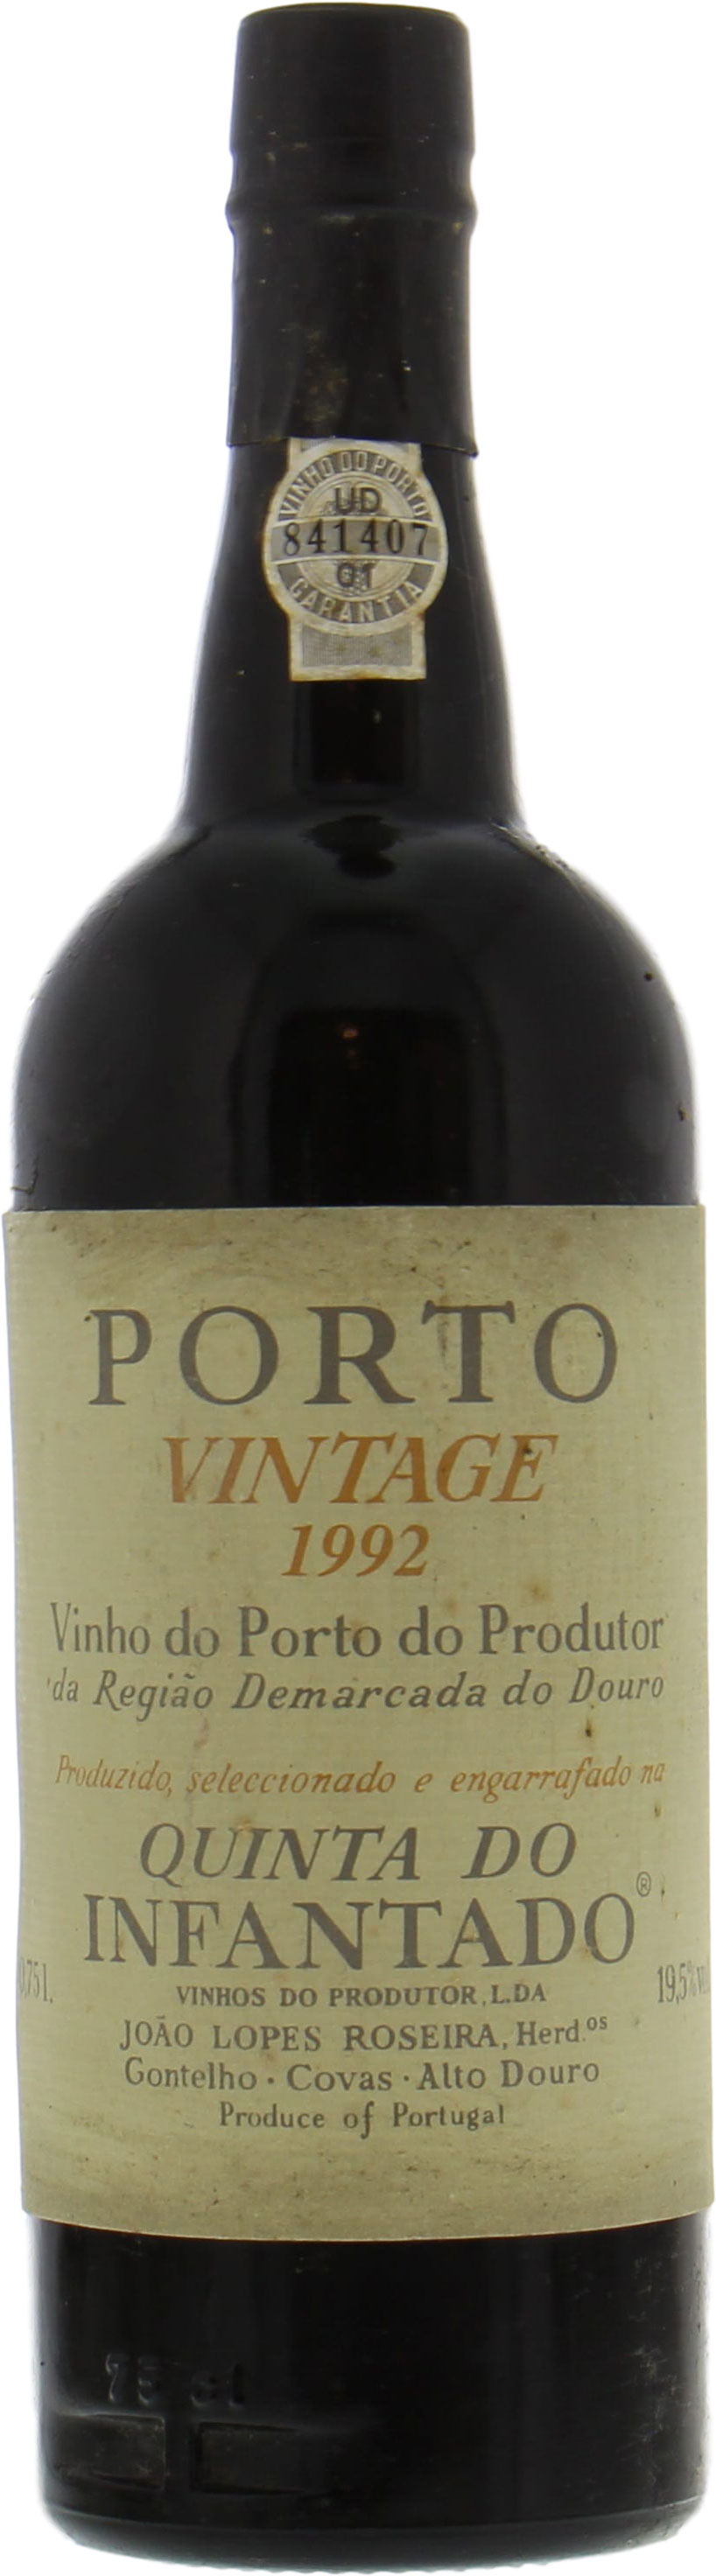 Quinta do Infantado - Vintage Port 1992 Perfect